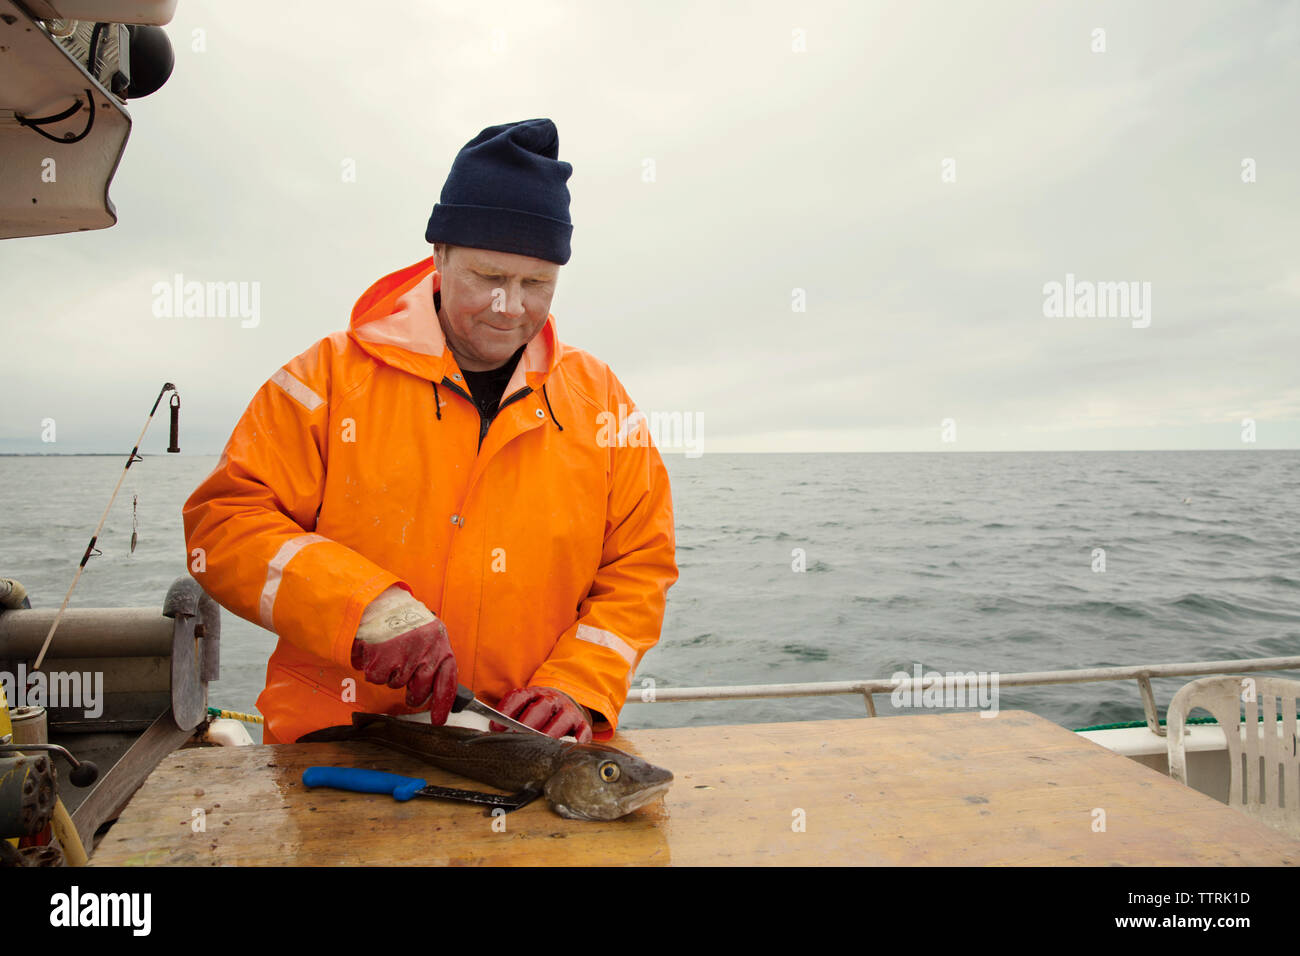 Fisherman in orange protective workwear while cutting fish in boat on sea Stock Photo